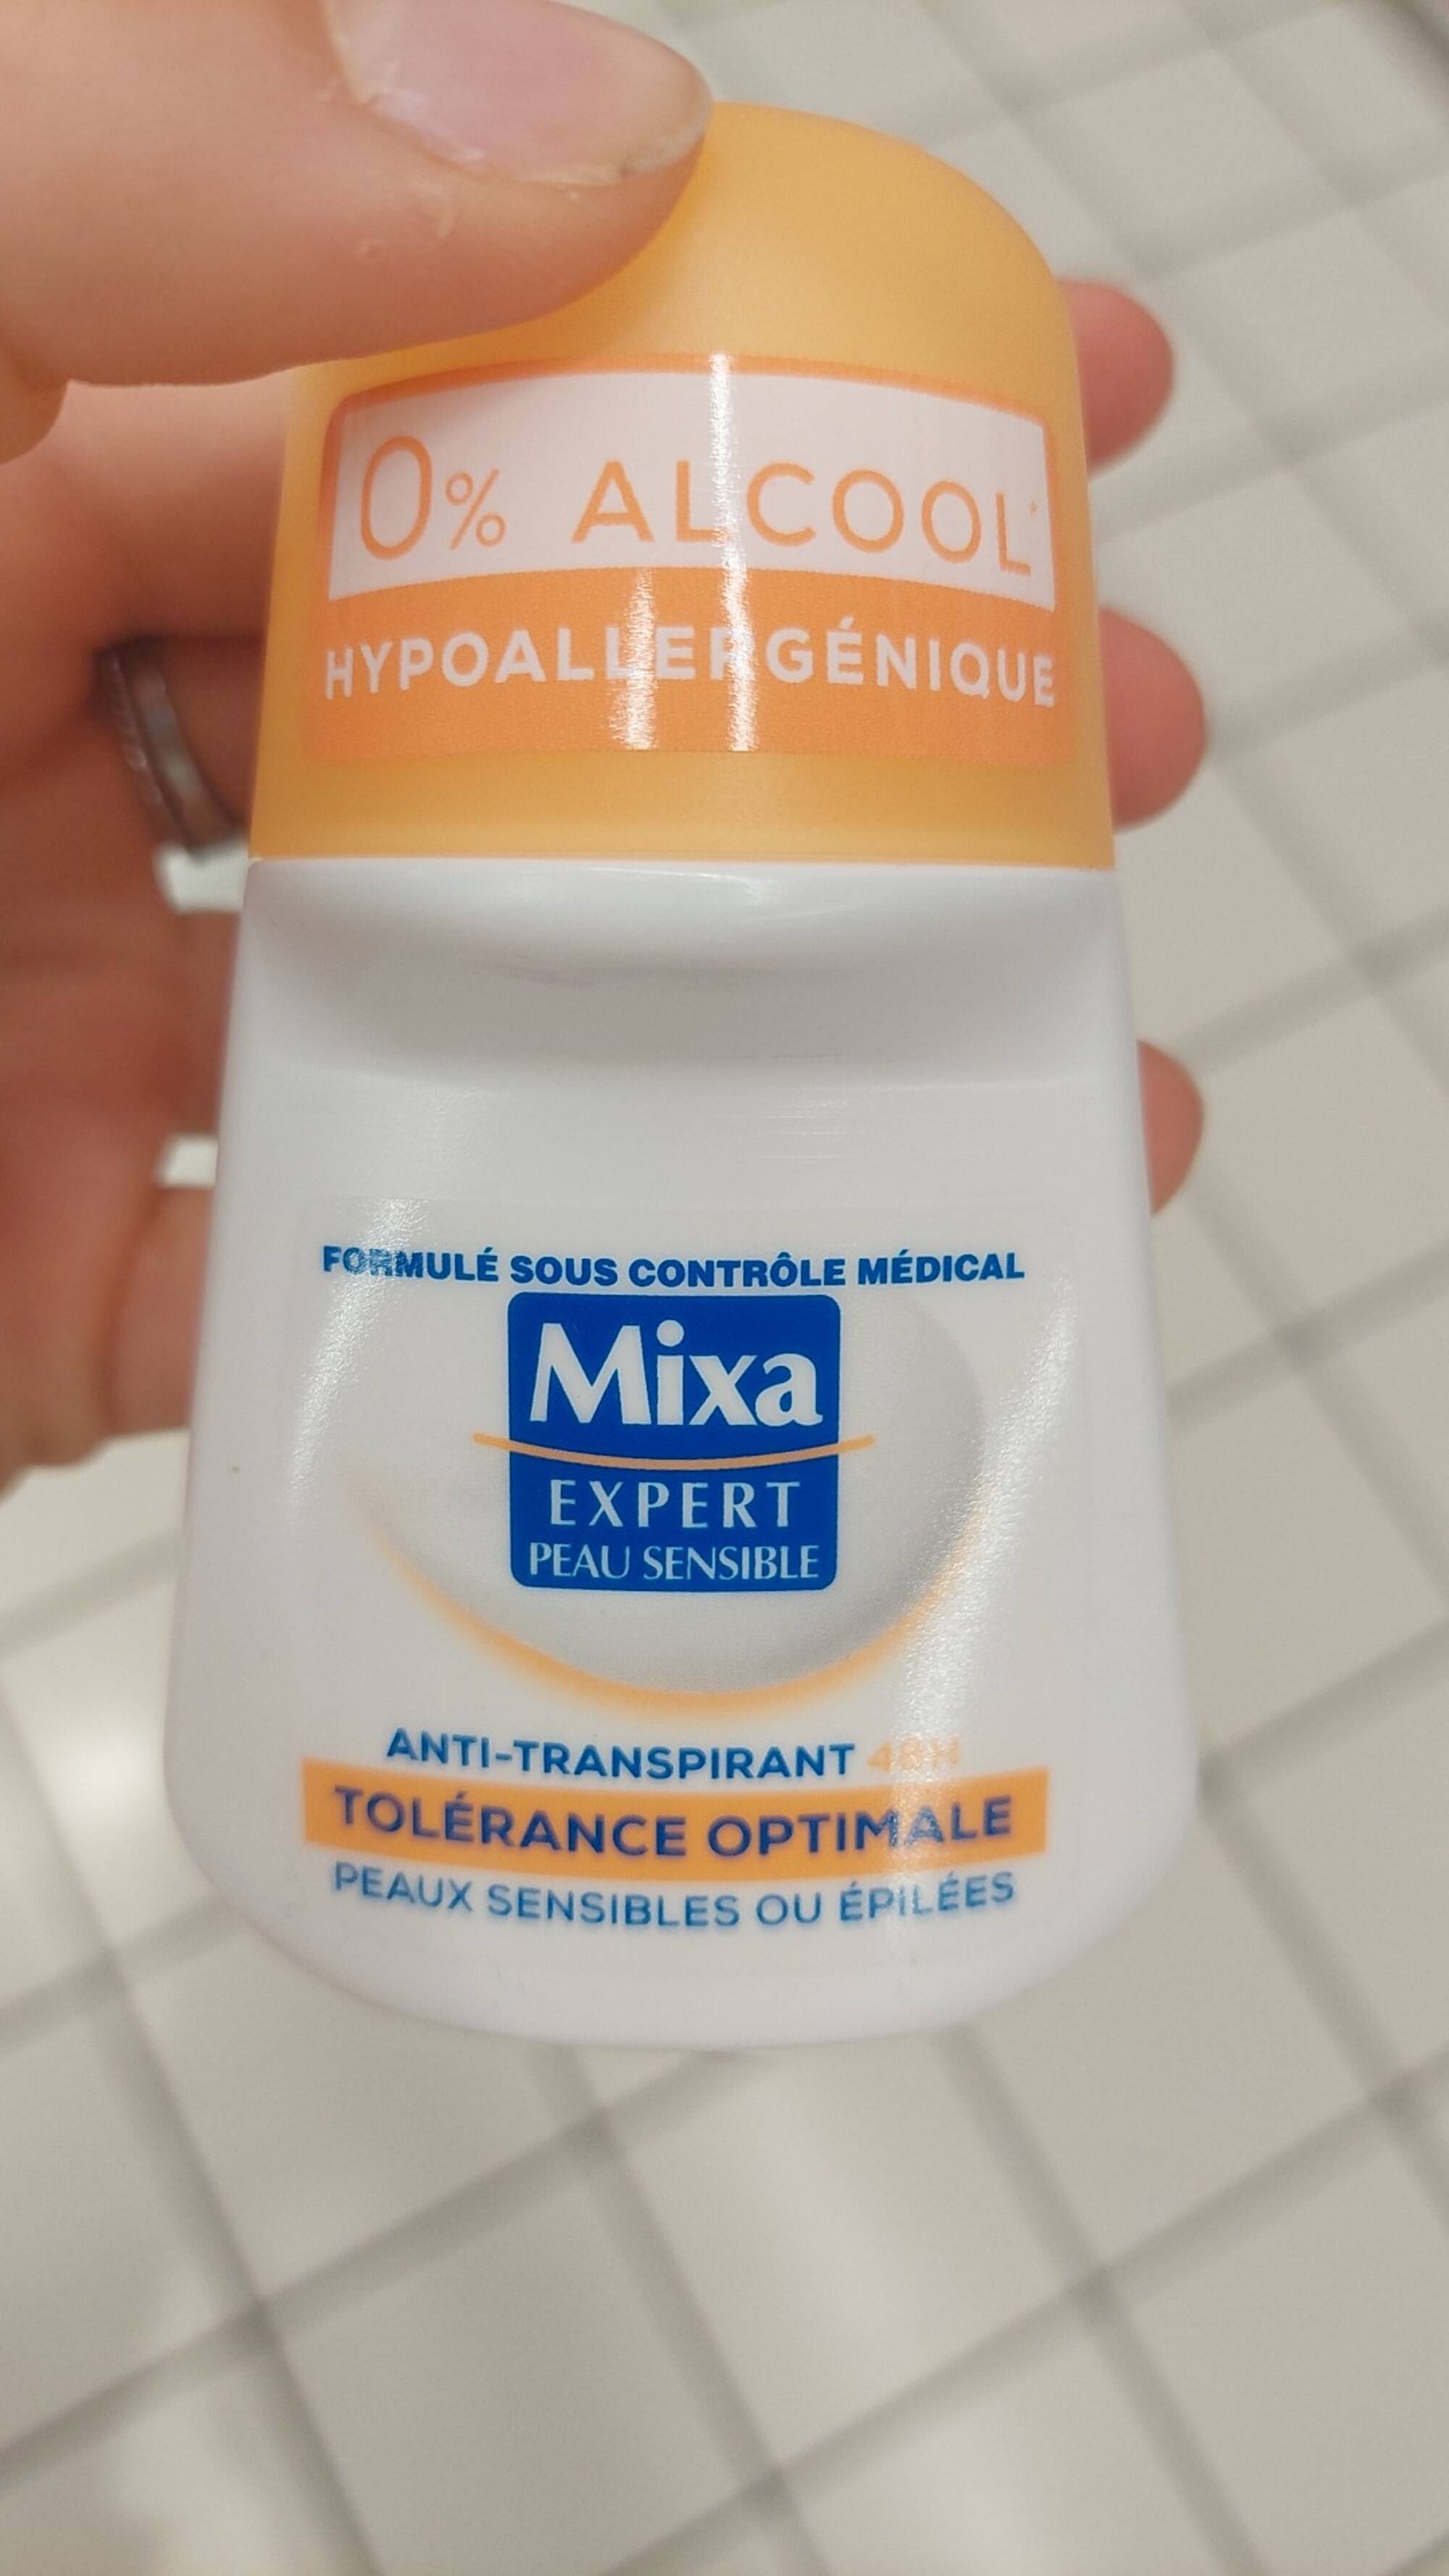 MIXA - Expert peau sensible - Anti-transpirant 48h tolérance optimale